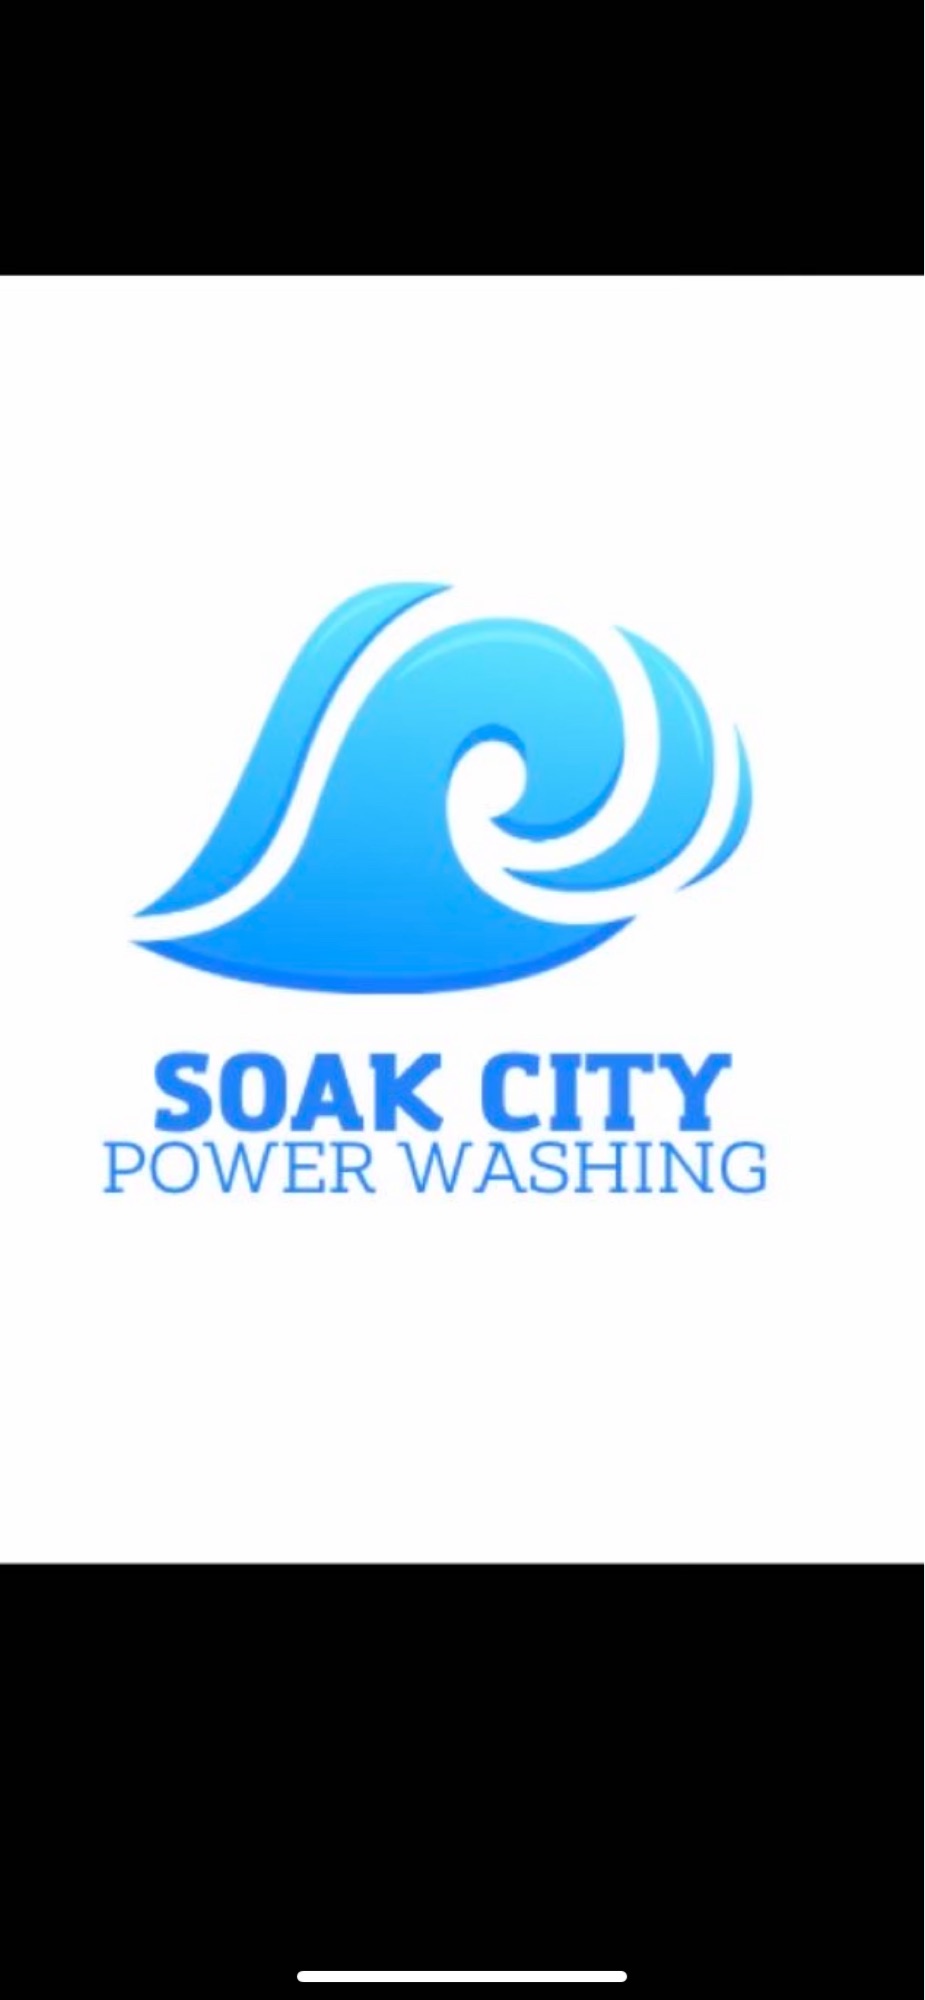 Soak City Power Washing - Unlicensed Contractor Logo